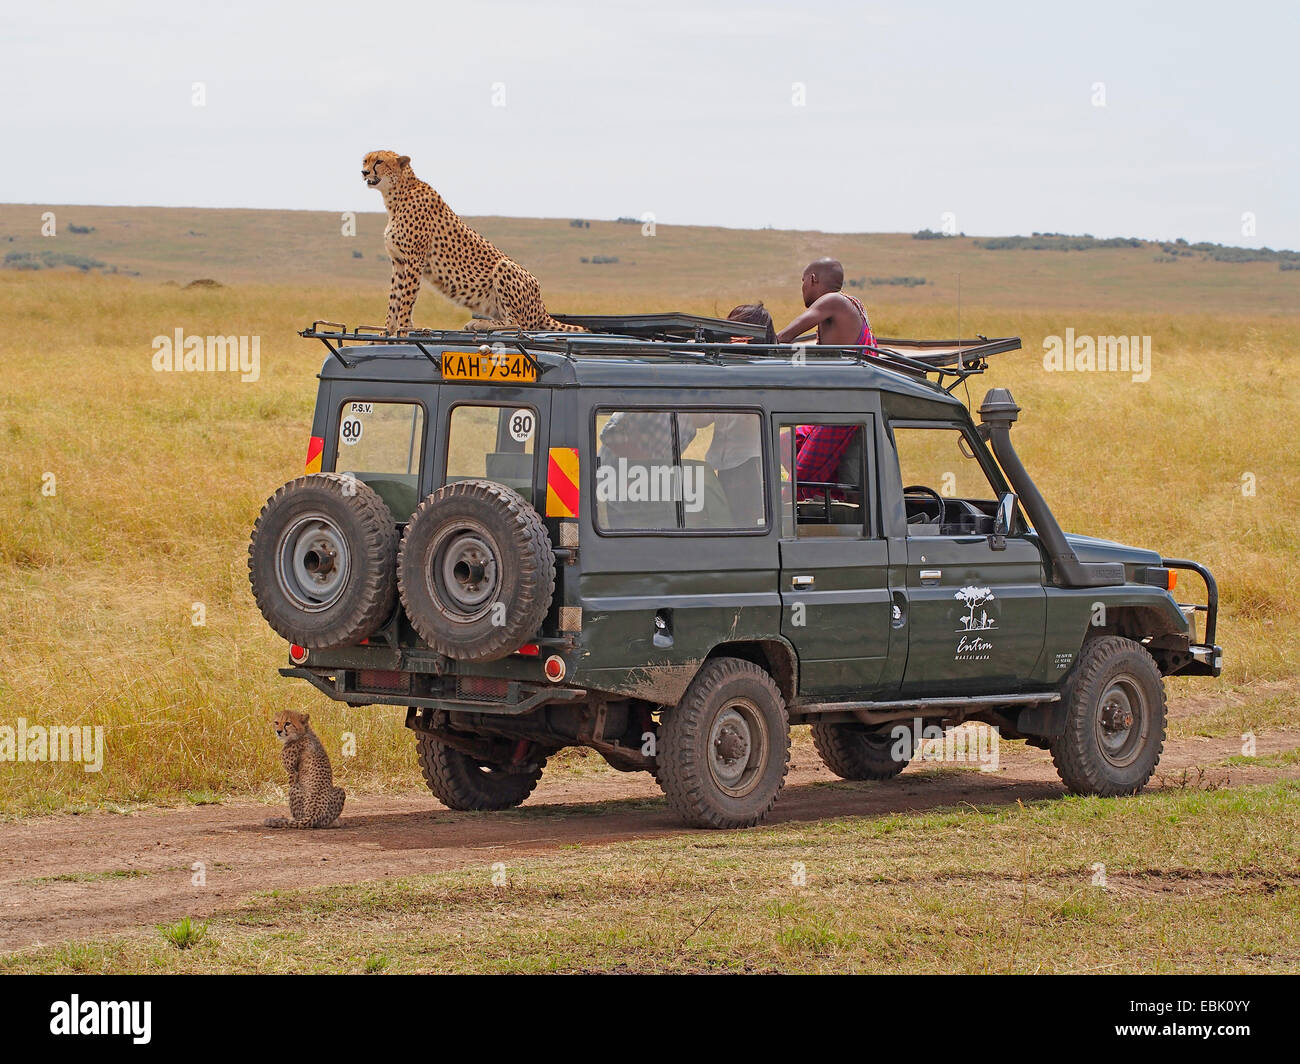 cheetah (Acinonyx jubatus), sitting on the roof of a safari jeep, Kenya, Masai Mara National Park Stock Photo